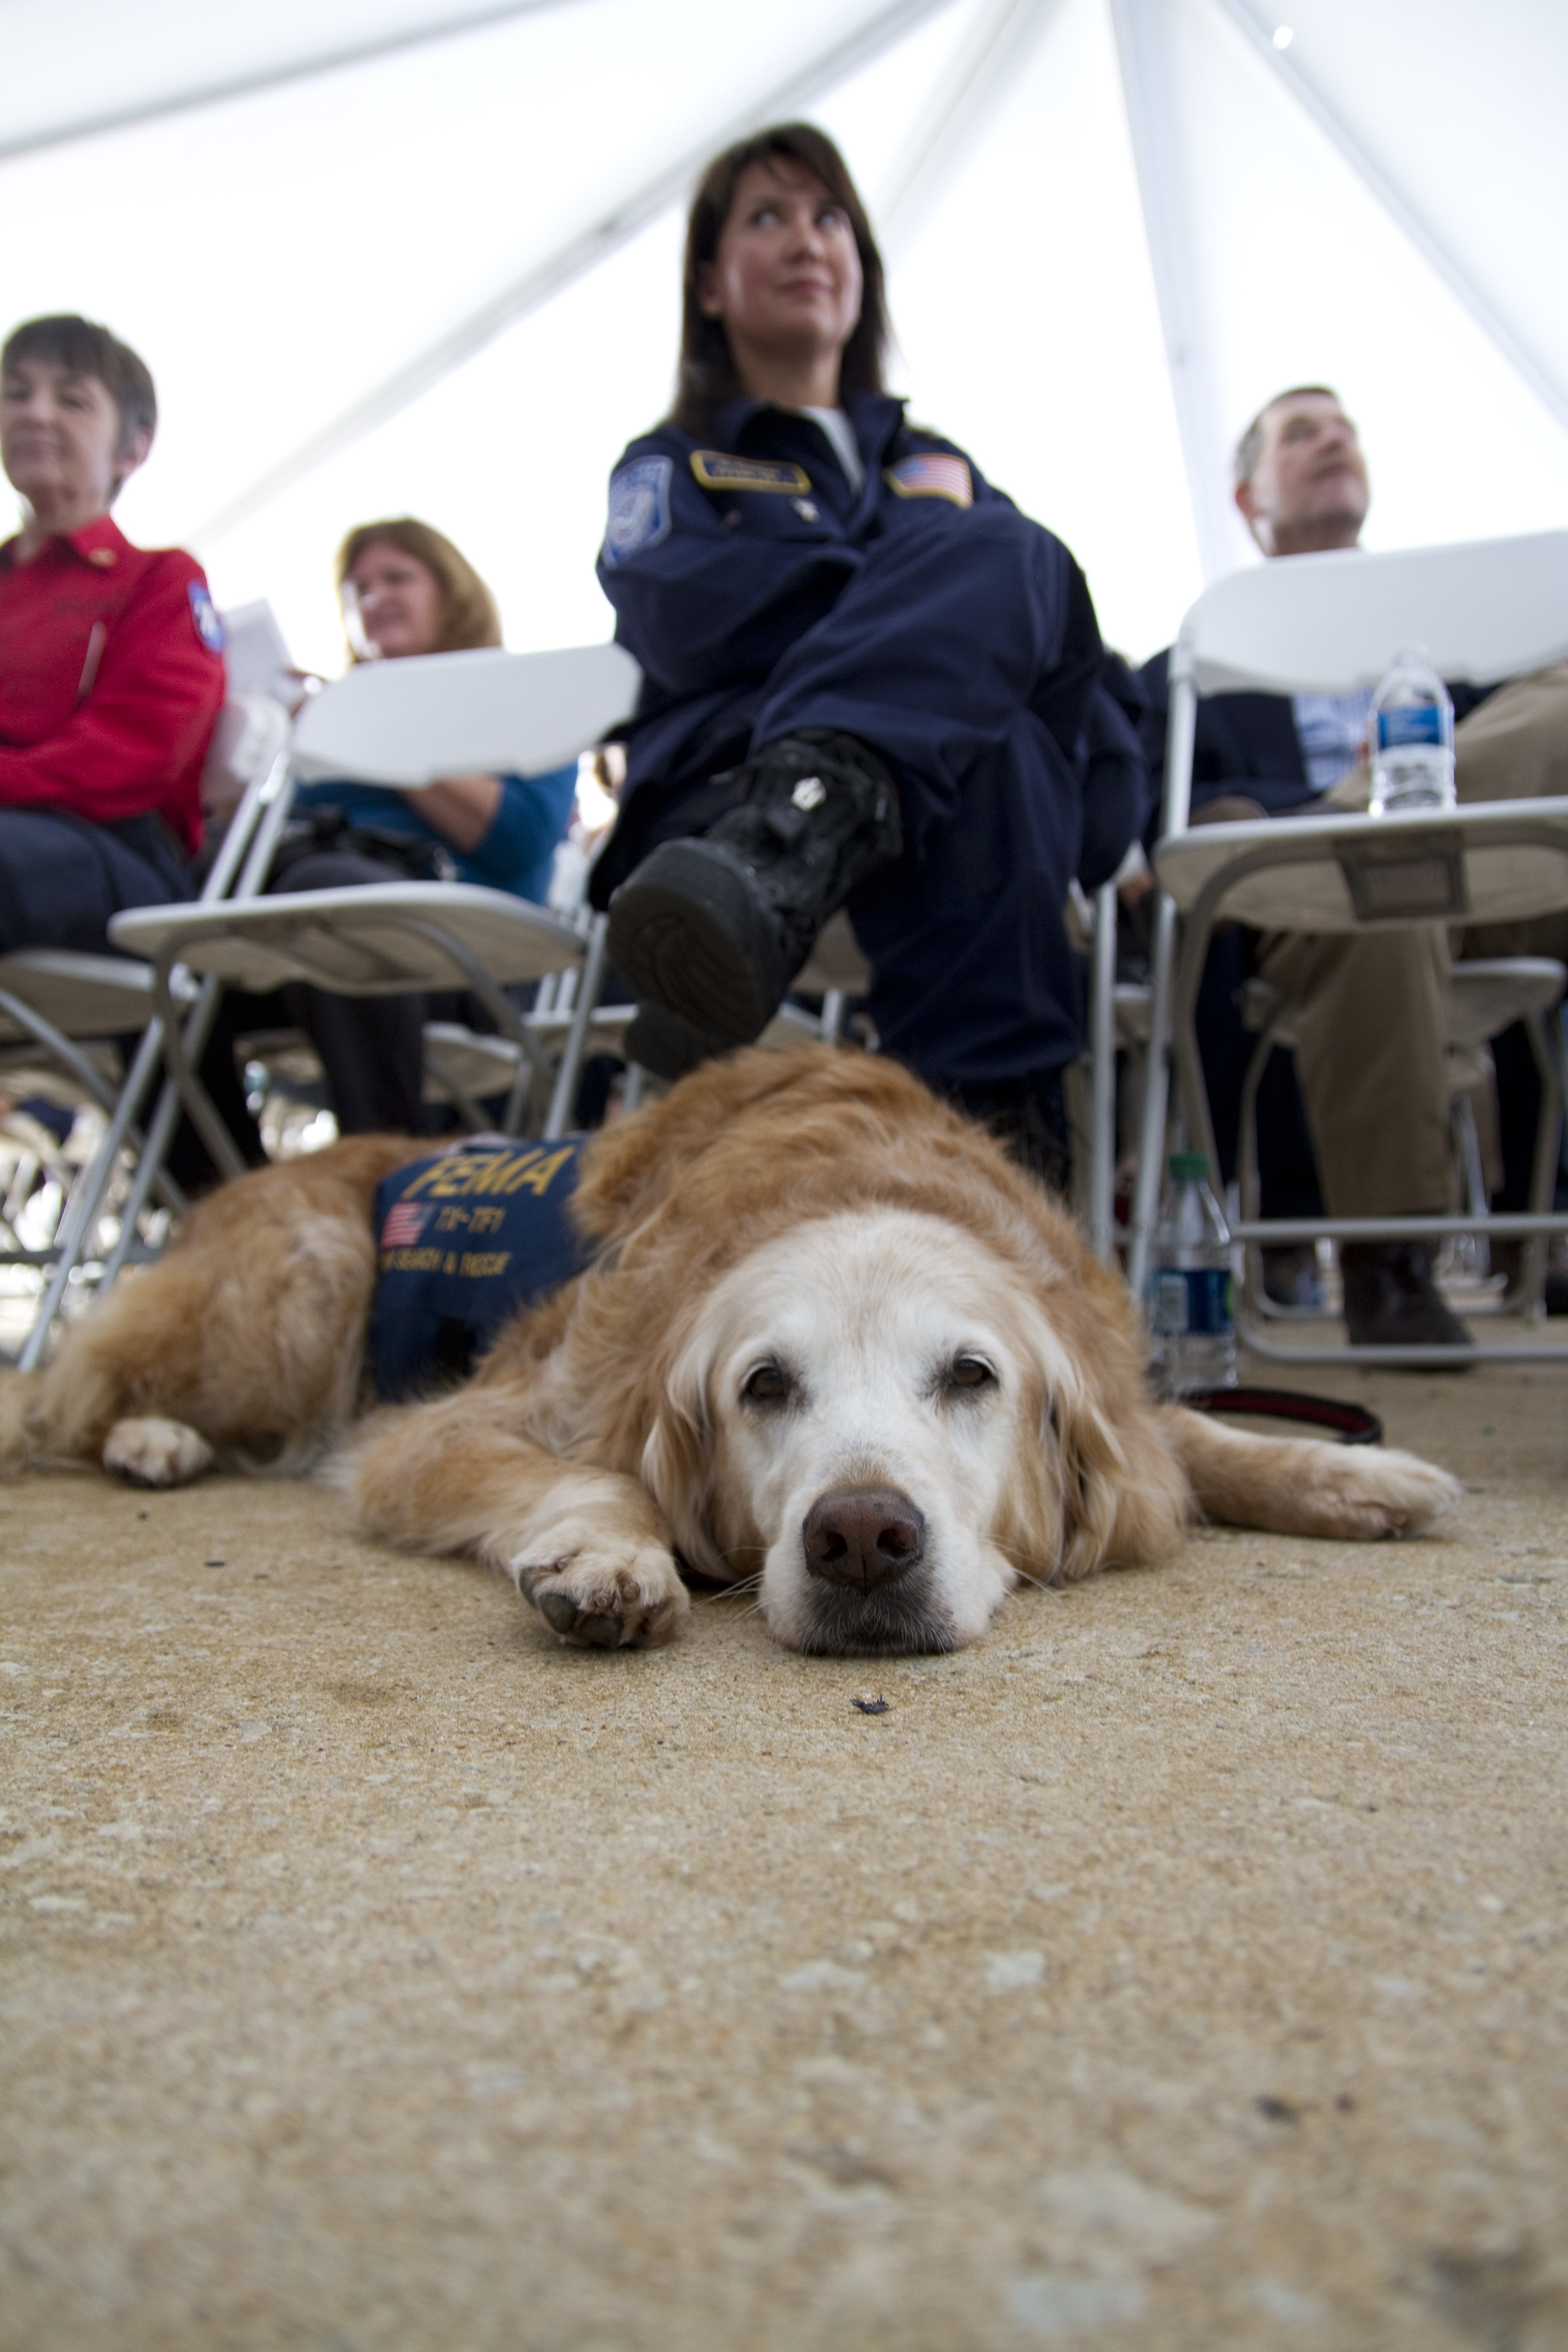 Older golden retriever with a FEMA vest lying on the floor at the feet of her handler